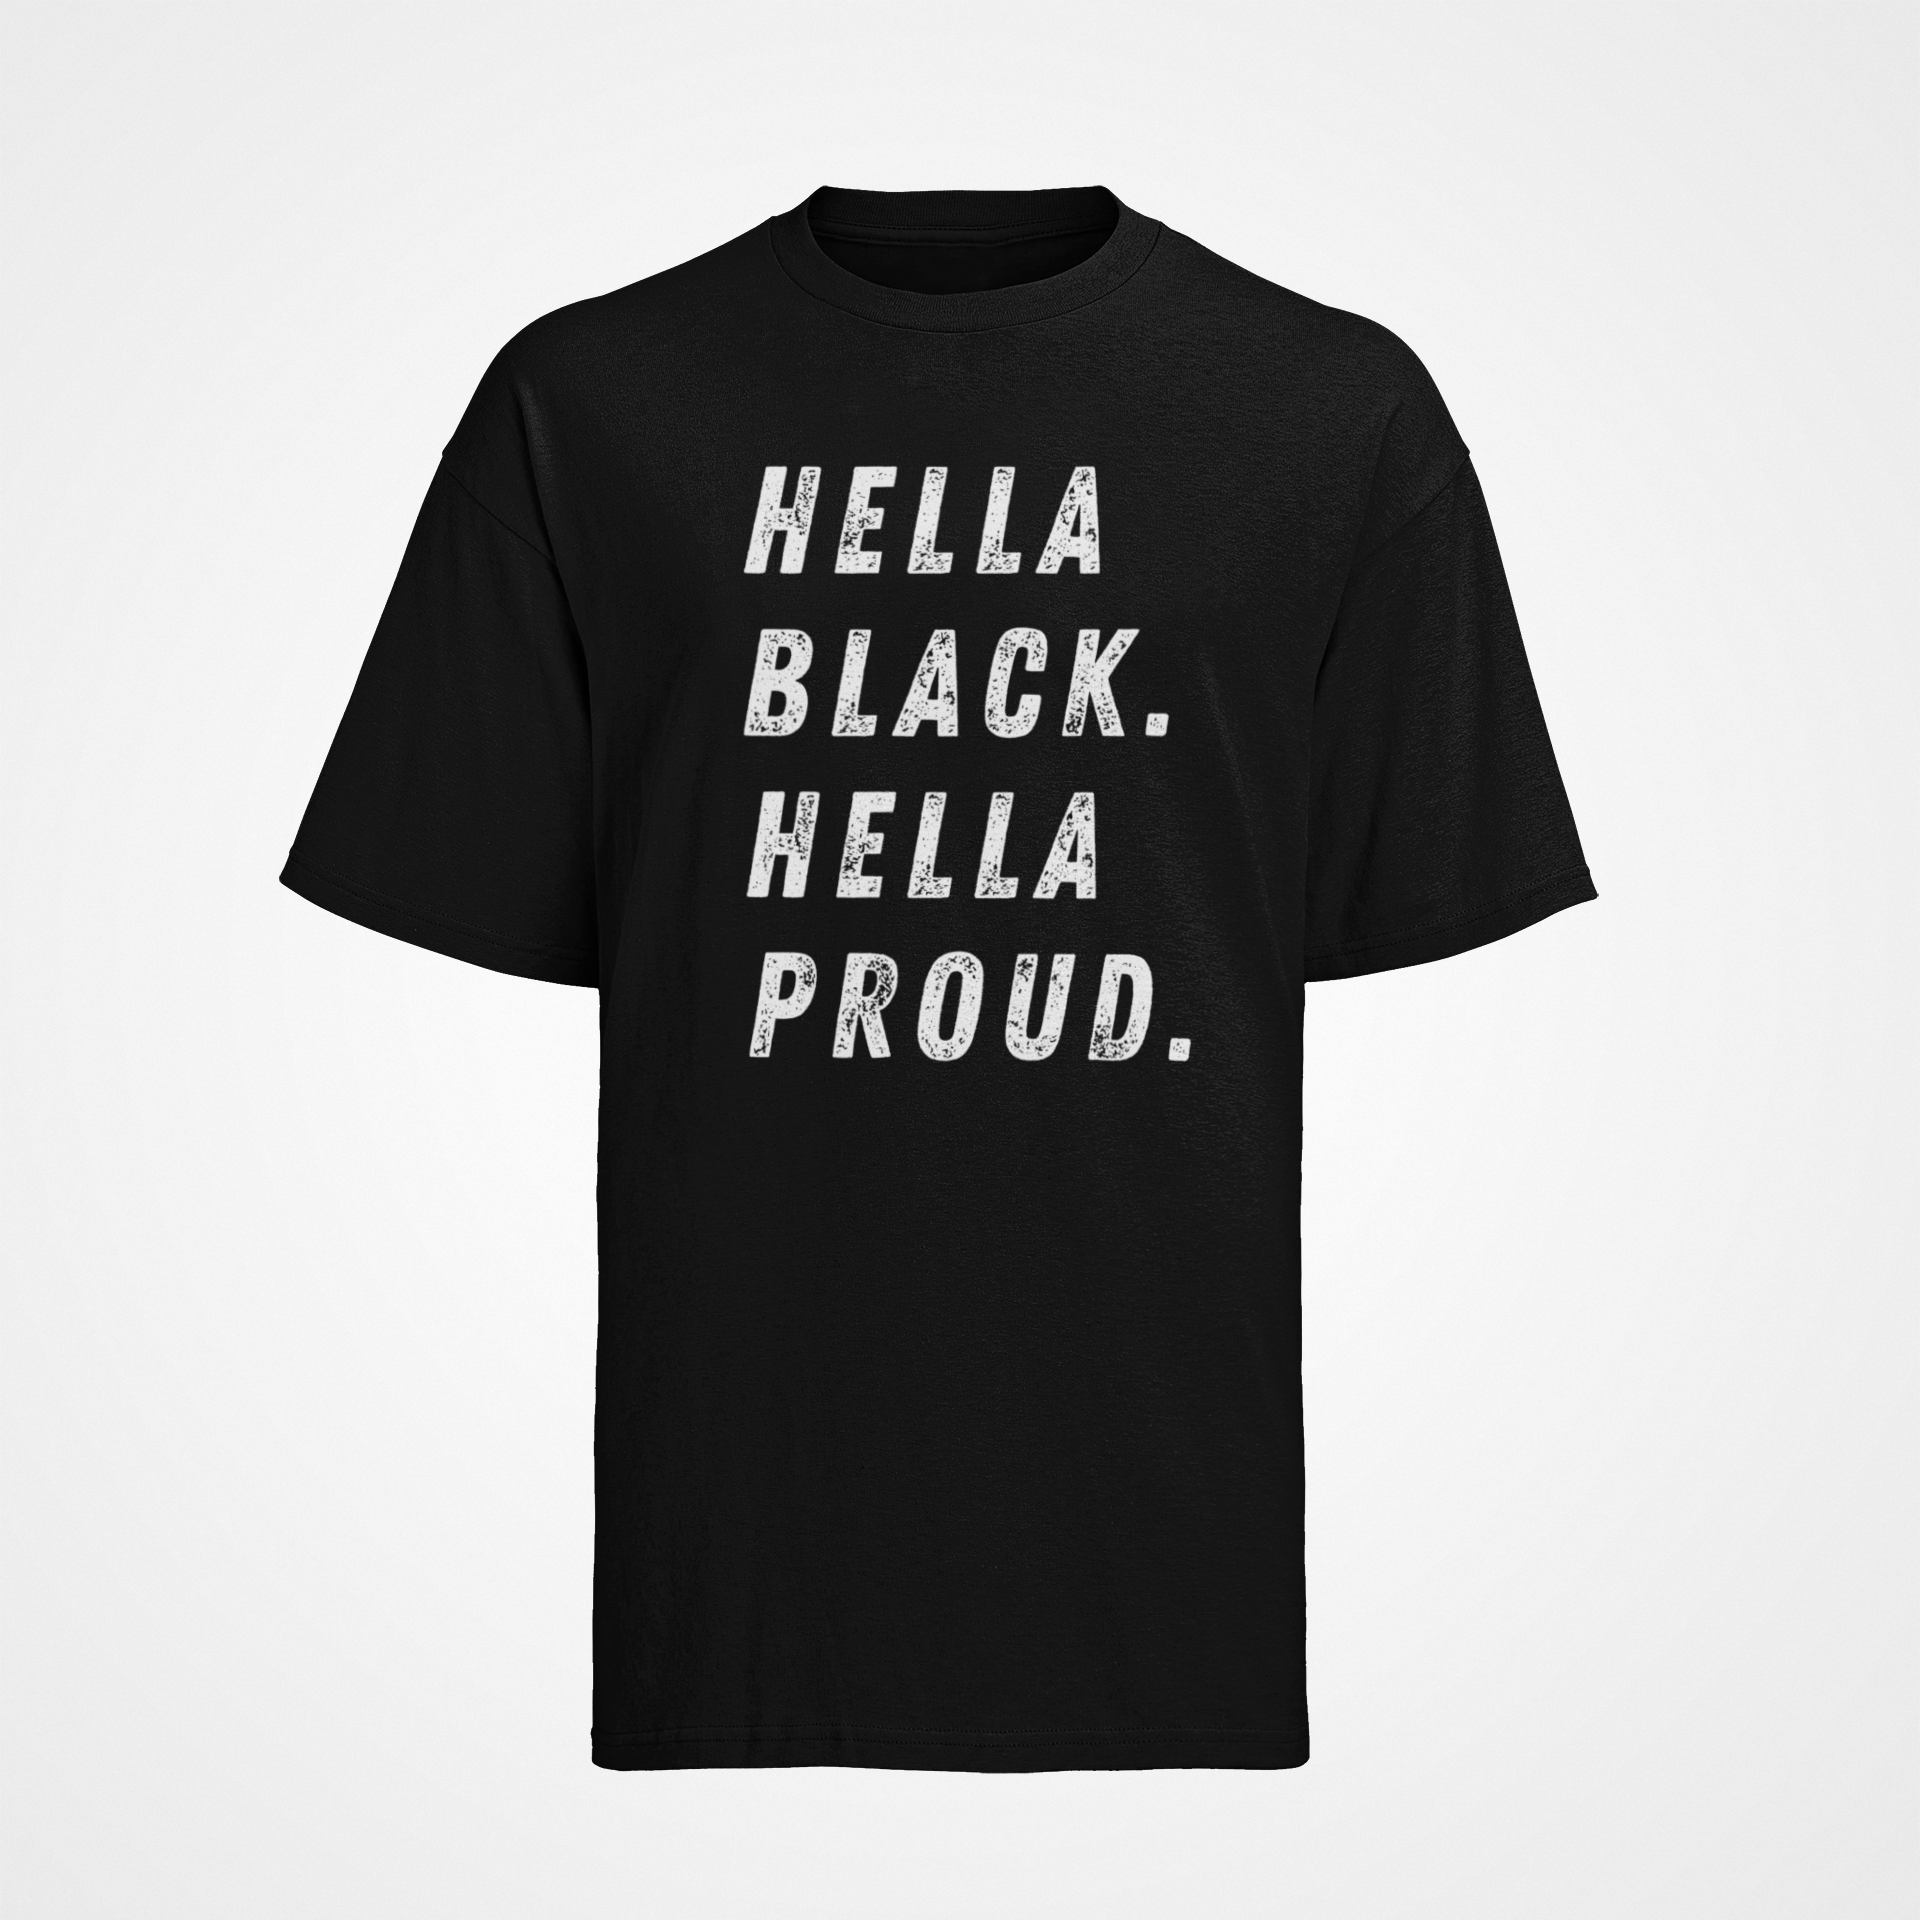 Hella Black. Hella Proud.